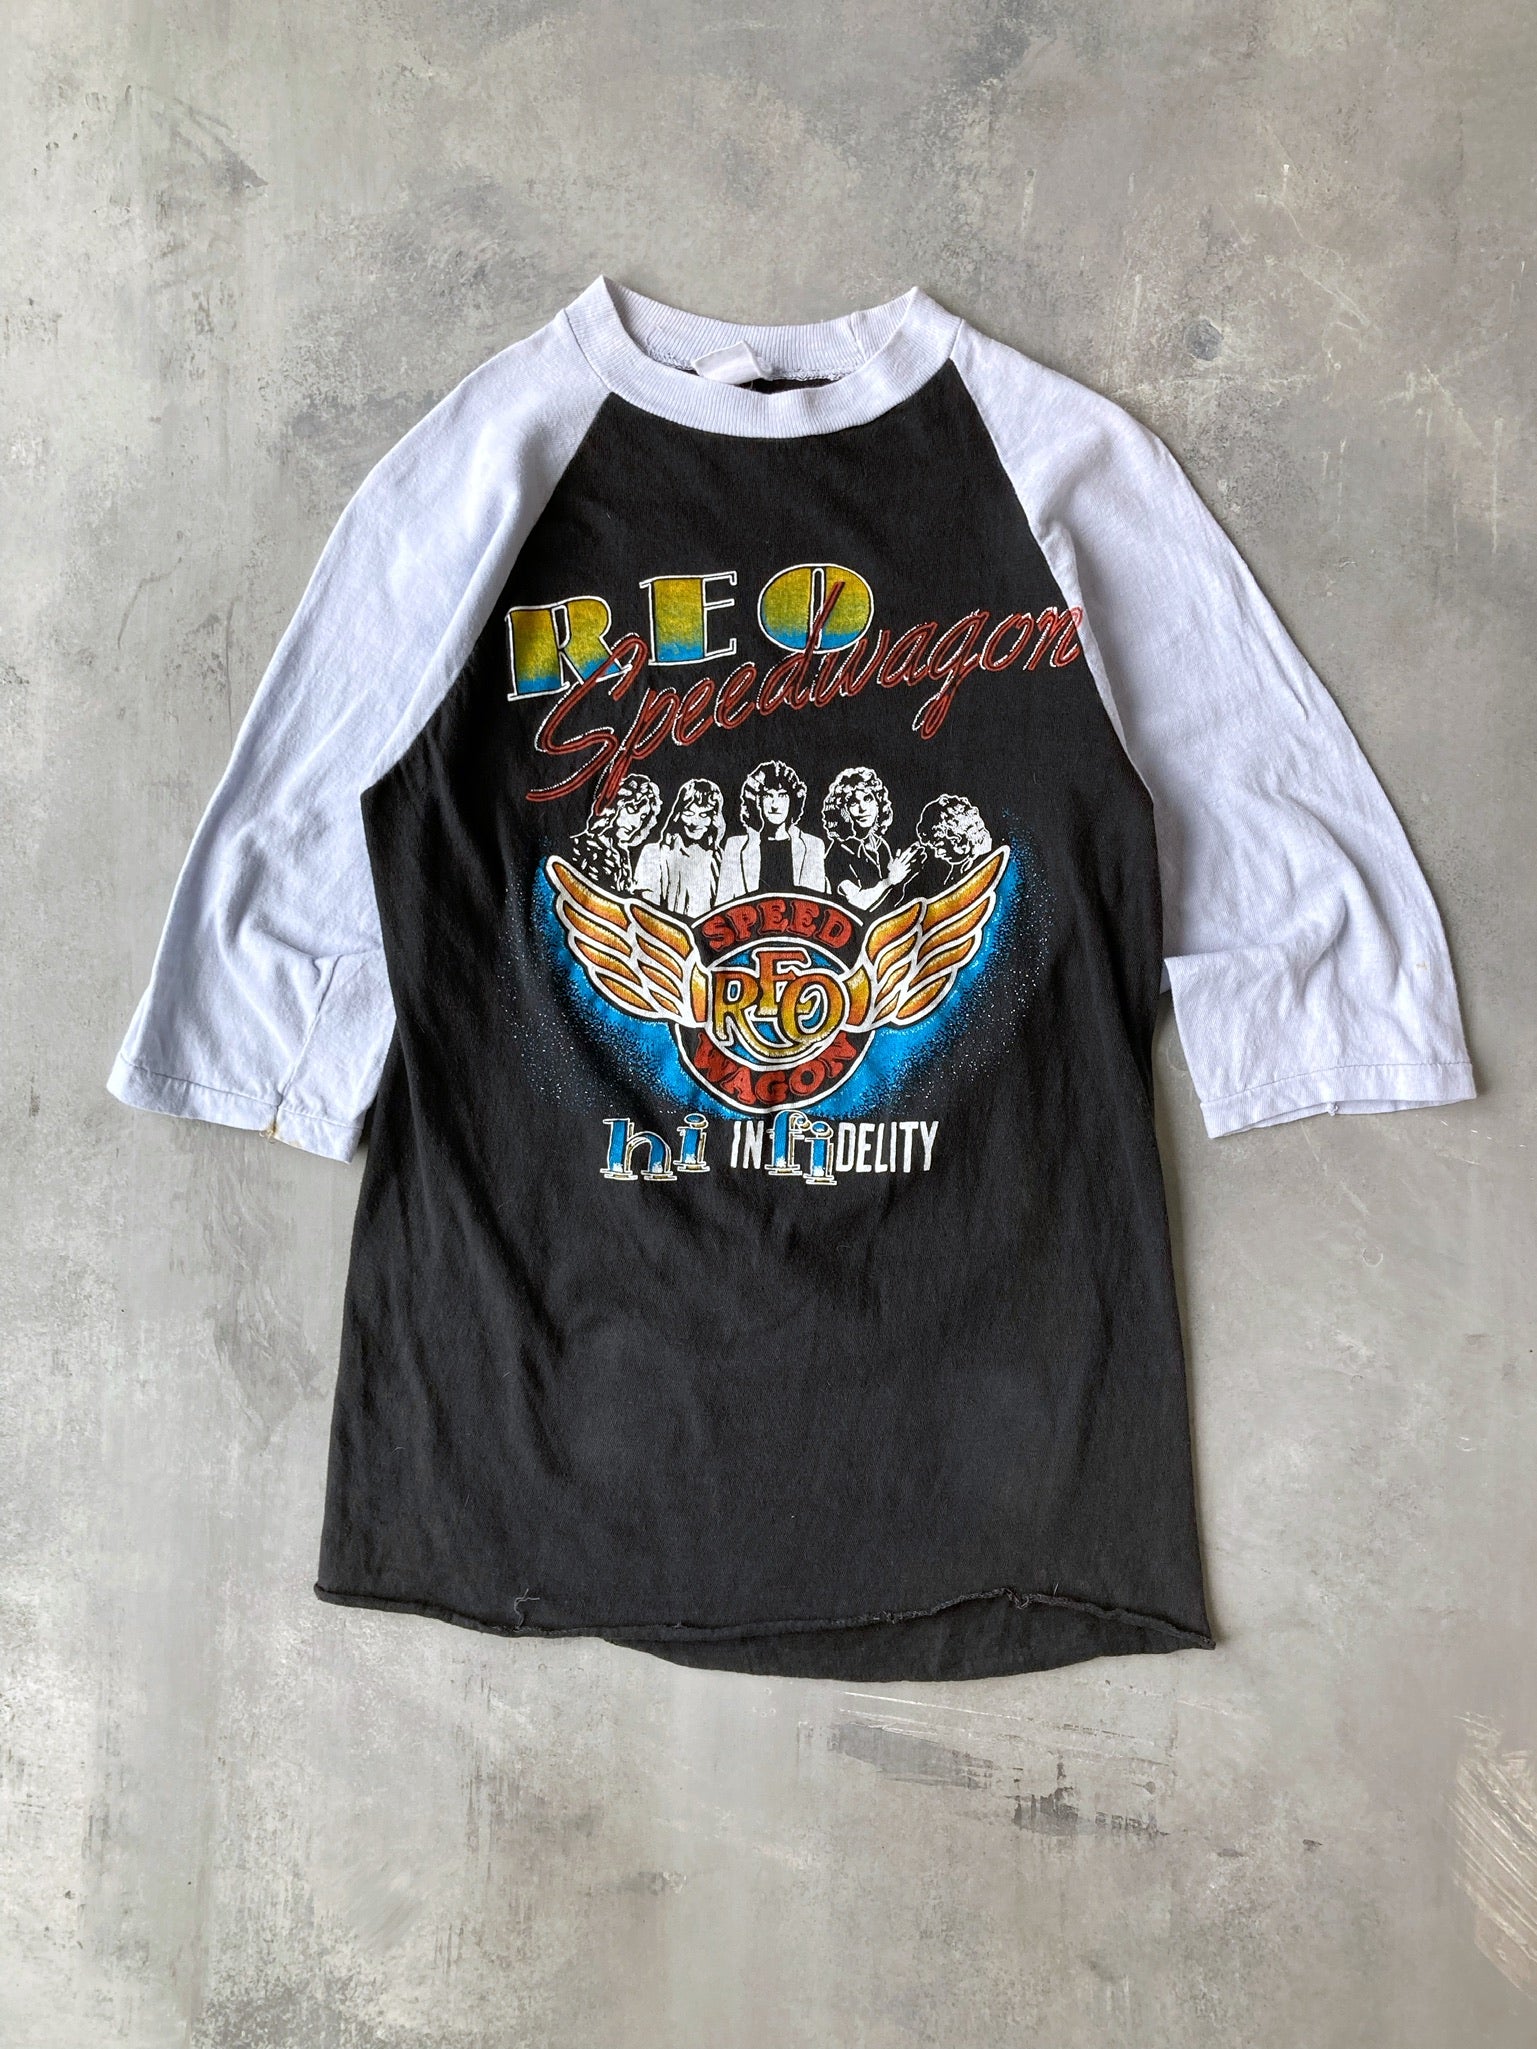 Reo Wagon Vintage Logo shirt